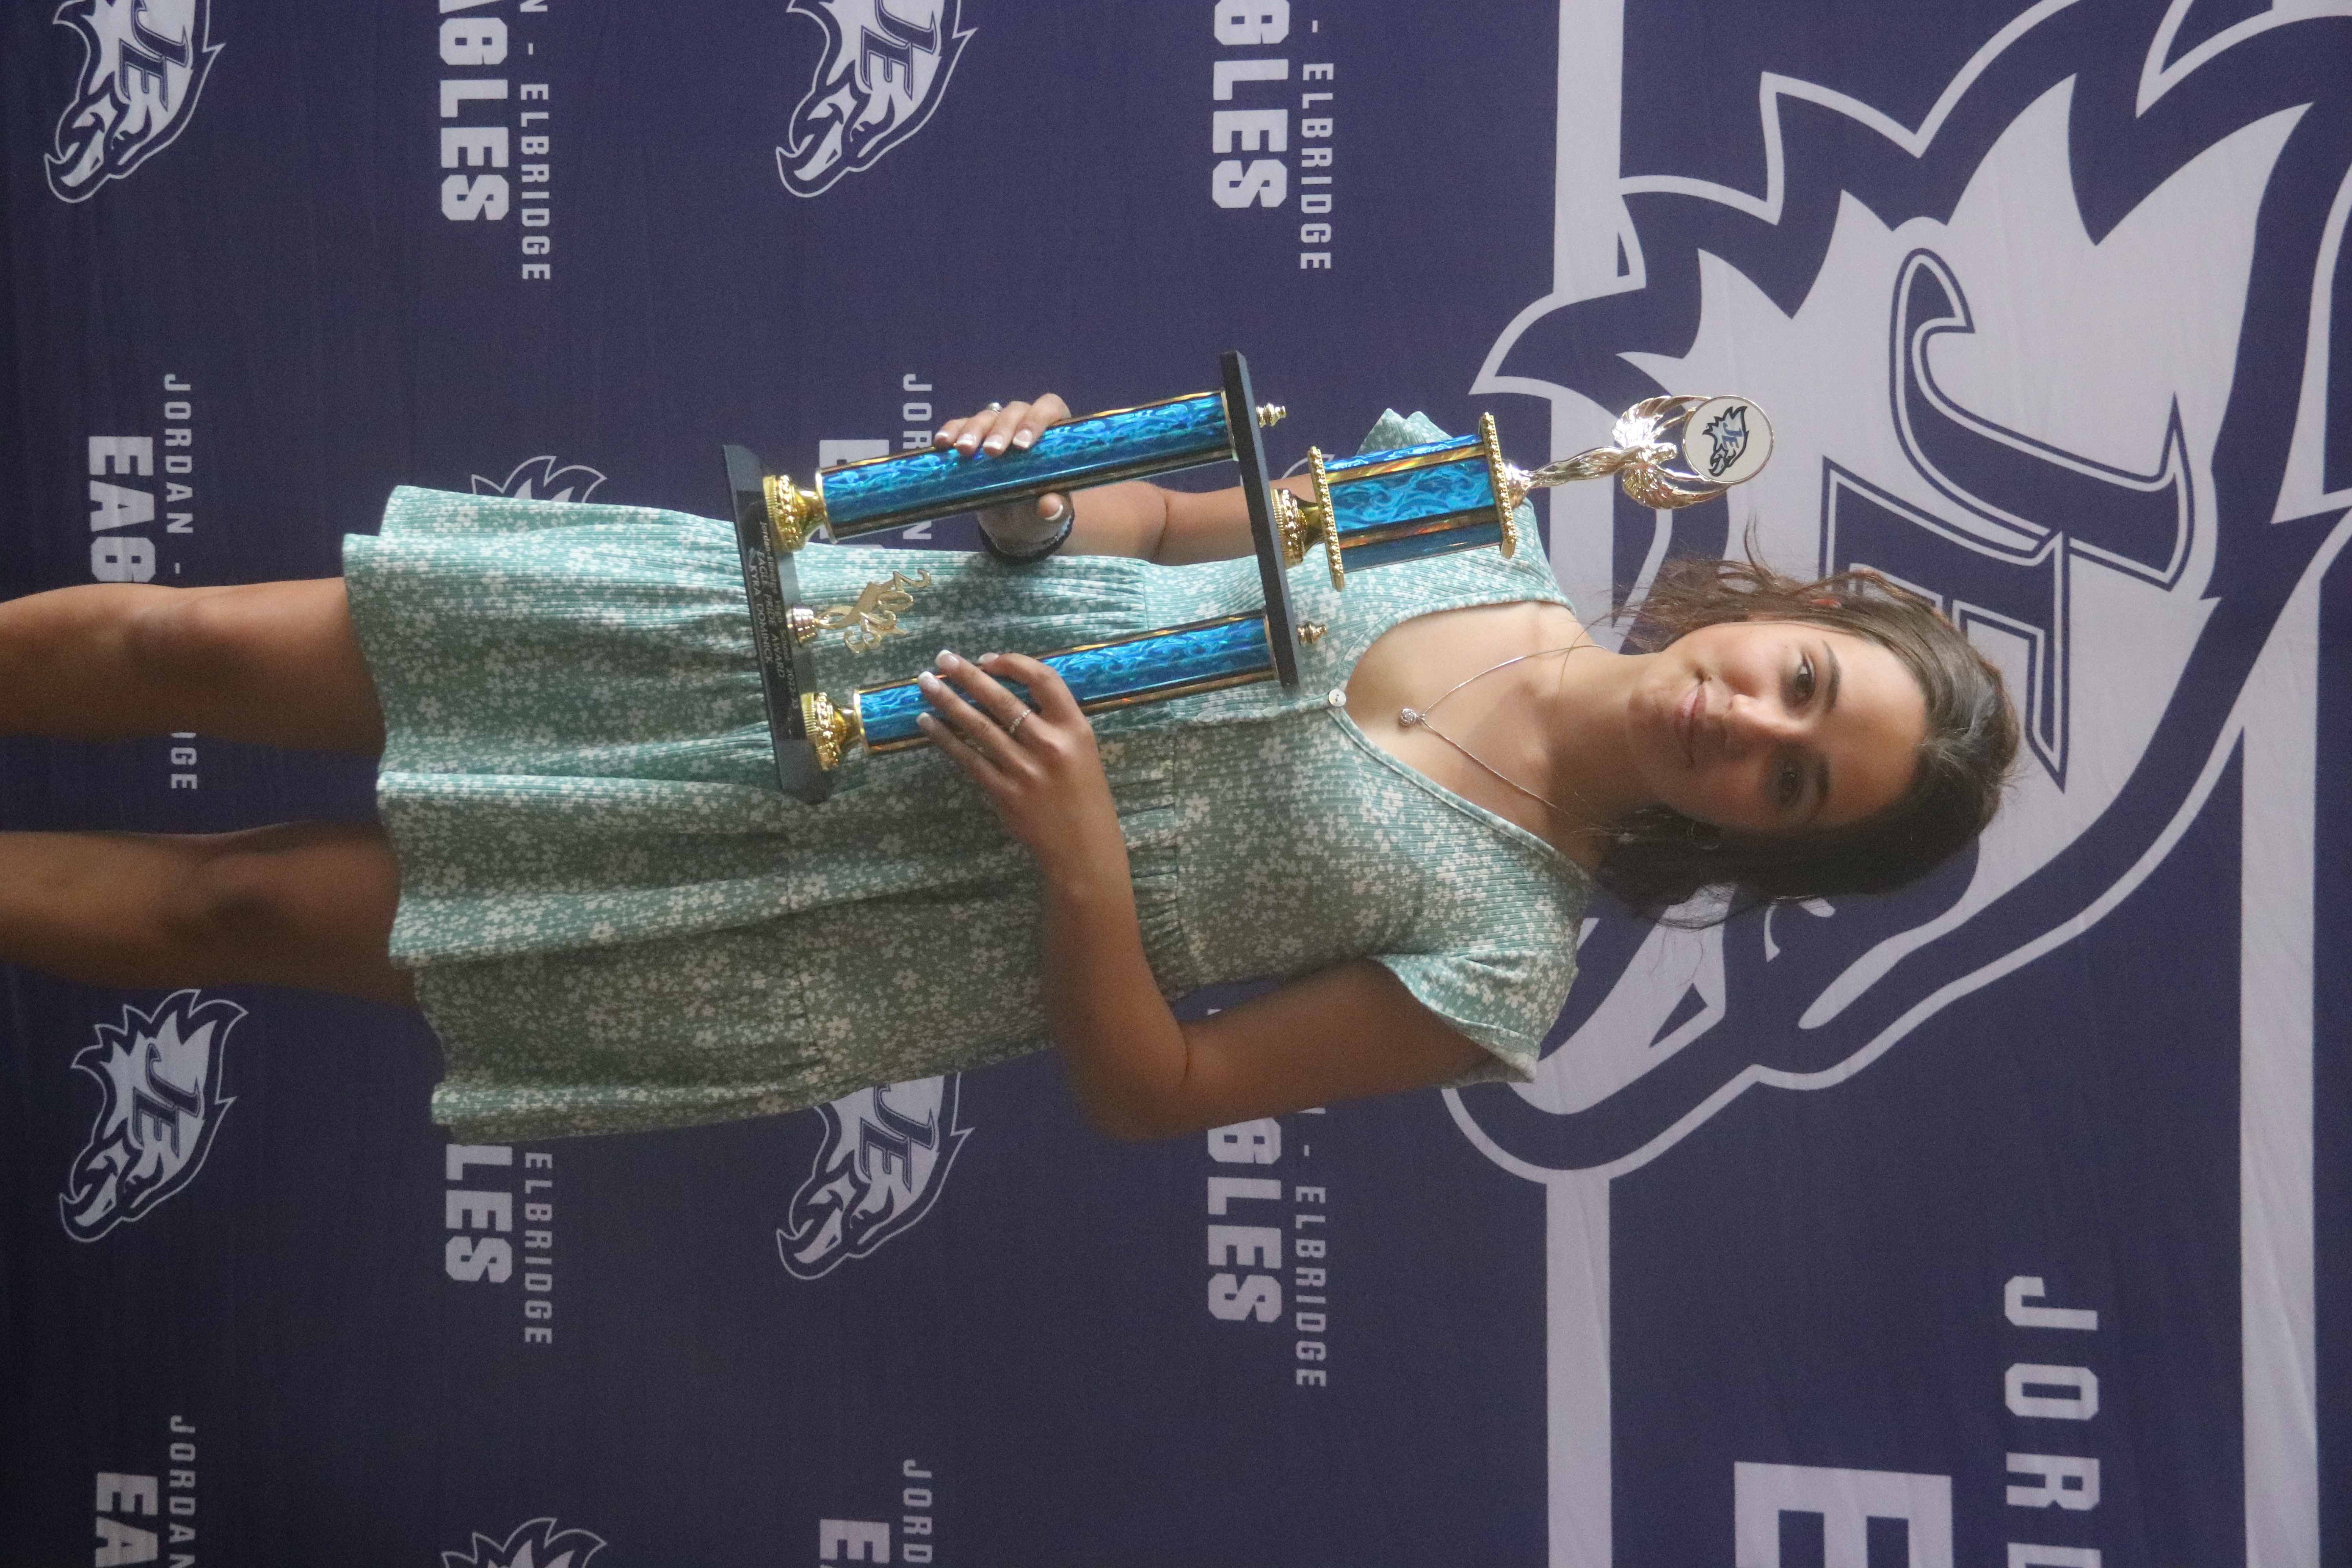 Kyra Dominic receives the Eagle Pride award